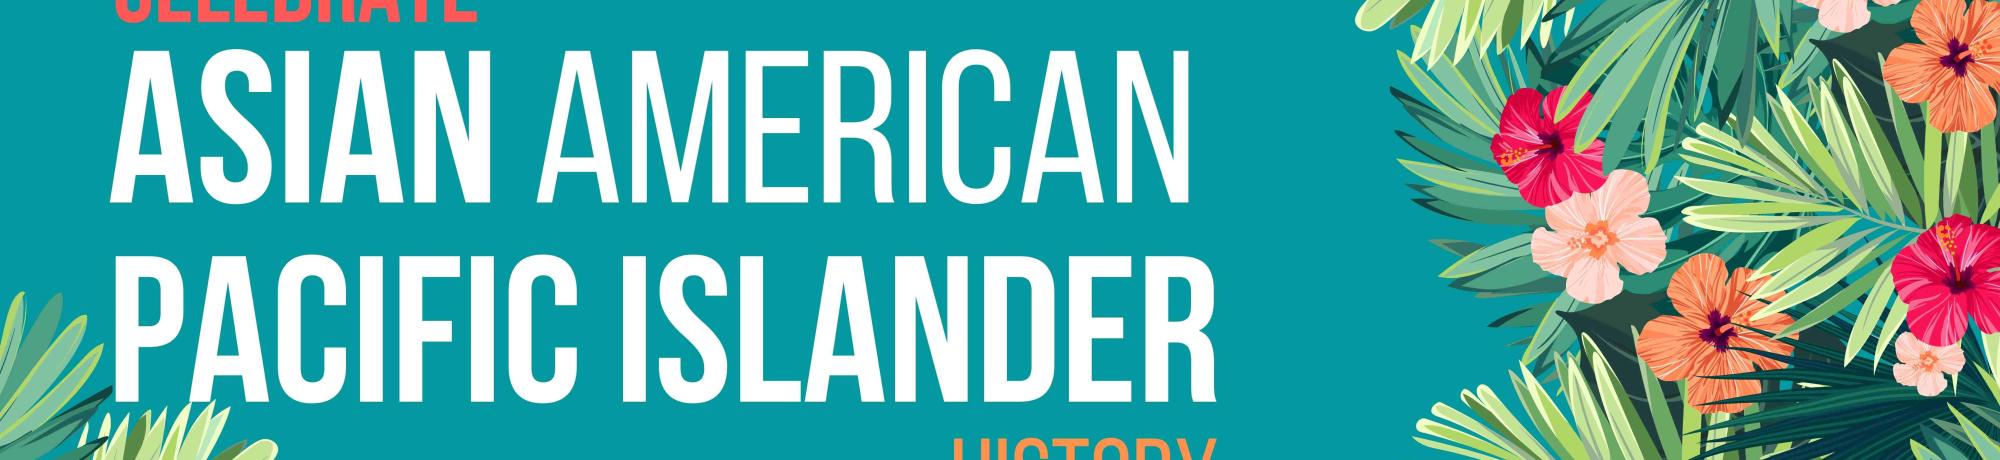 Celebrate Asian American Pacific Islander History